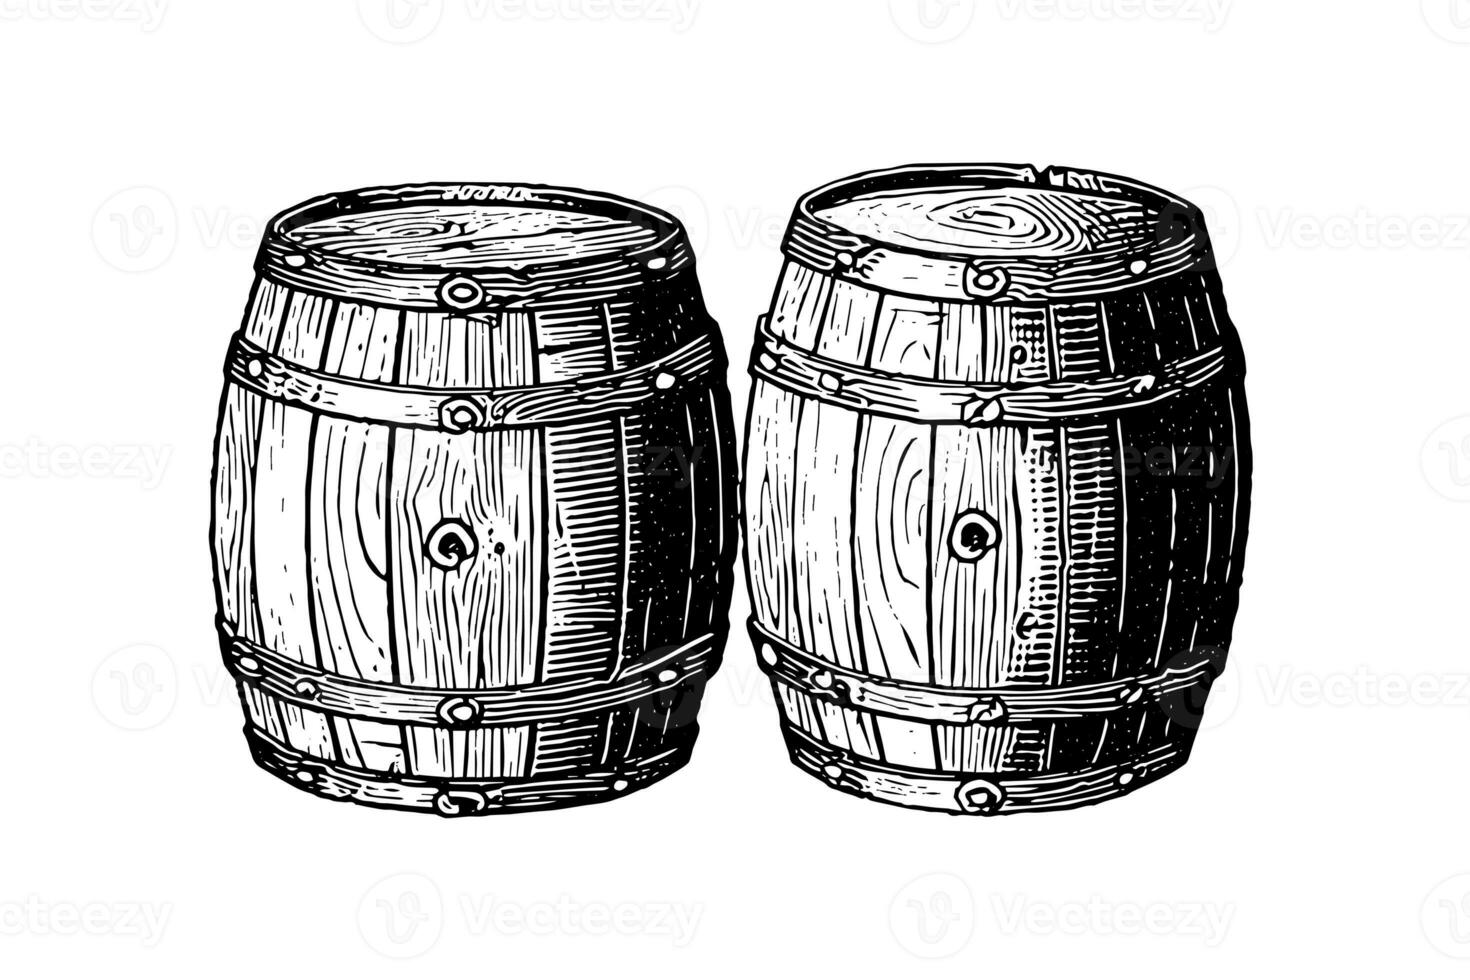 Oak wooden barrel hand drawn sketch engraving style vector illustration. photo